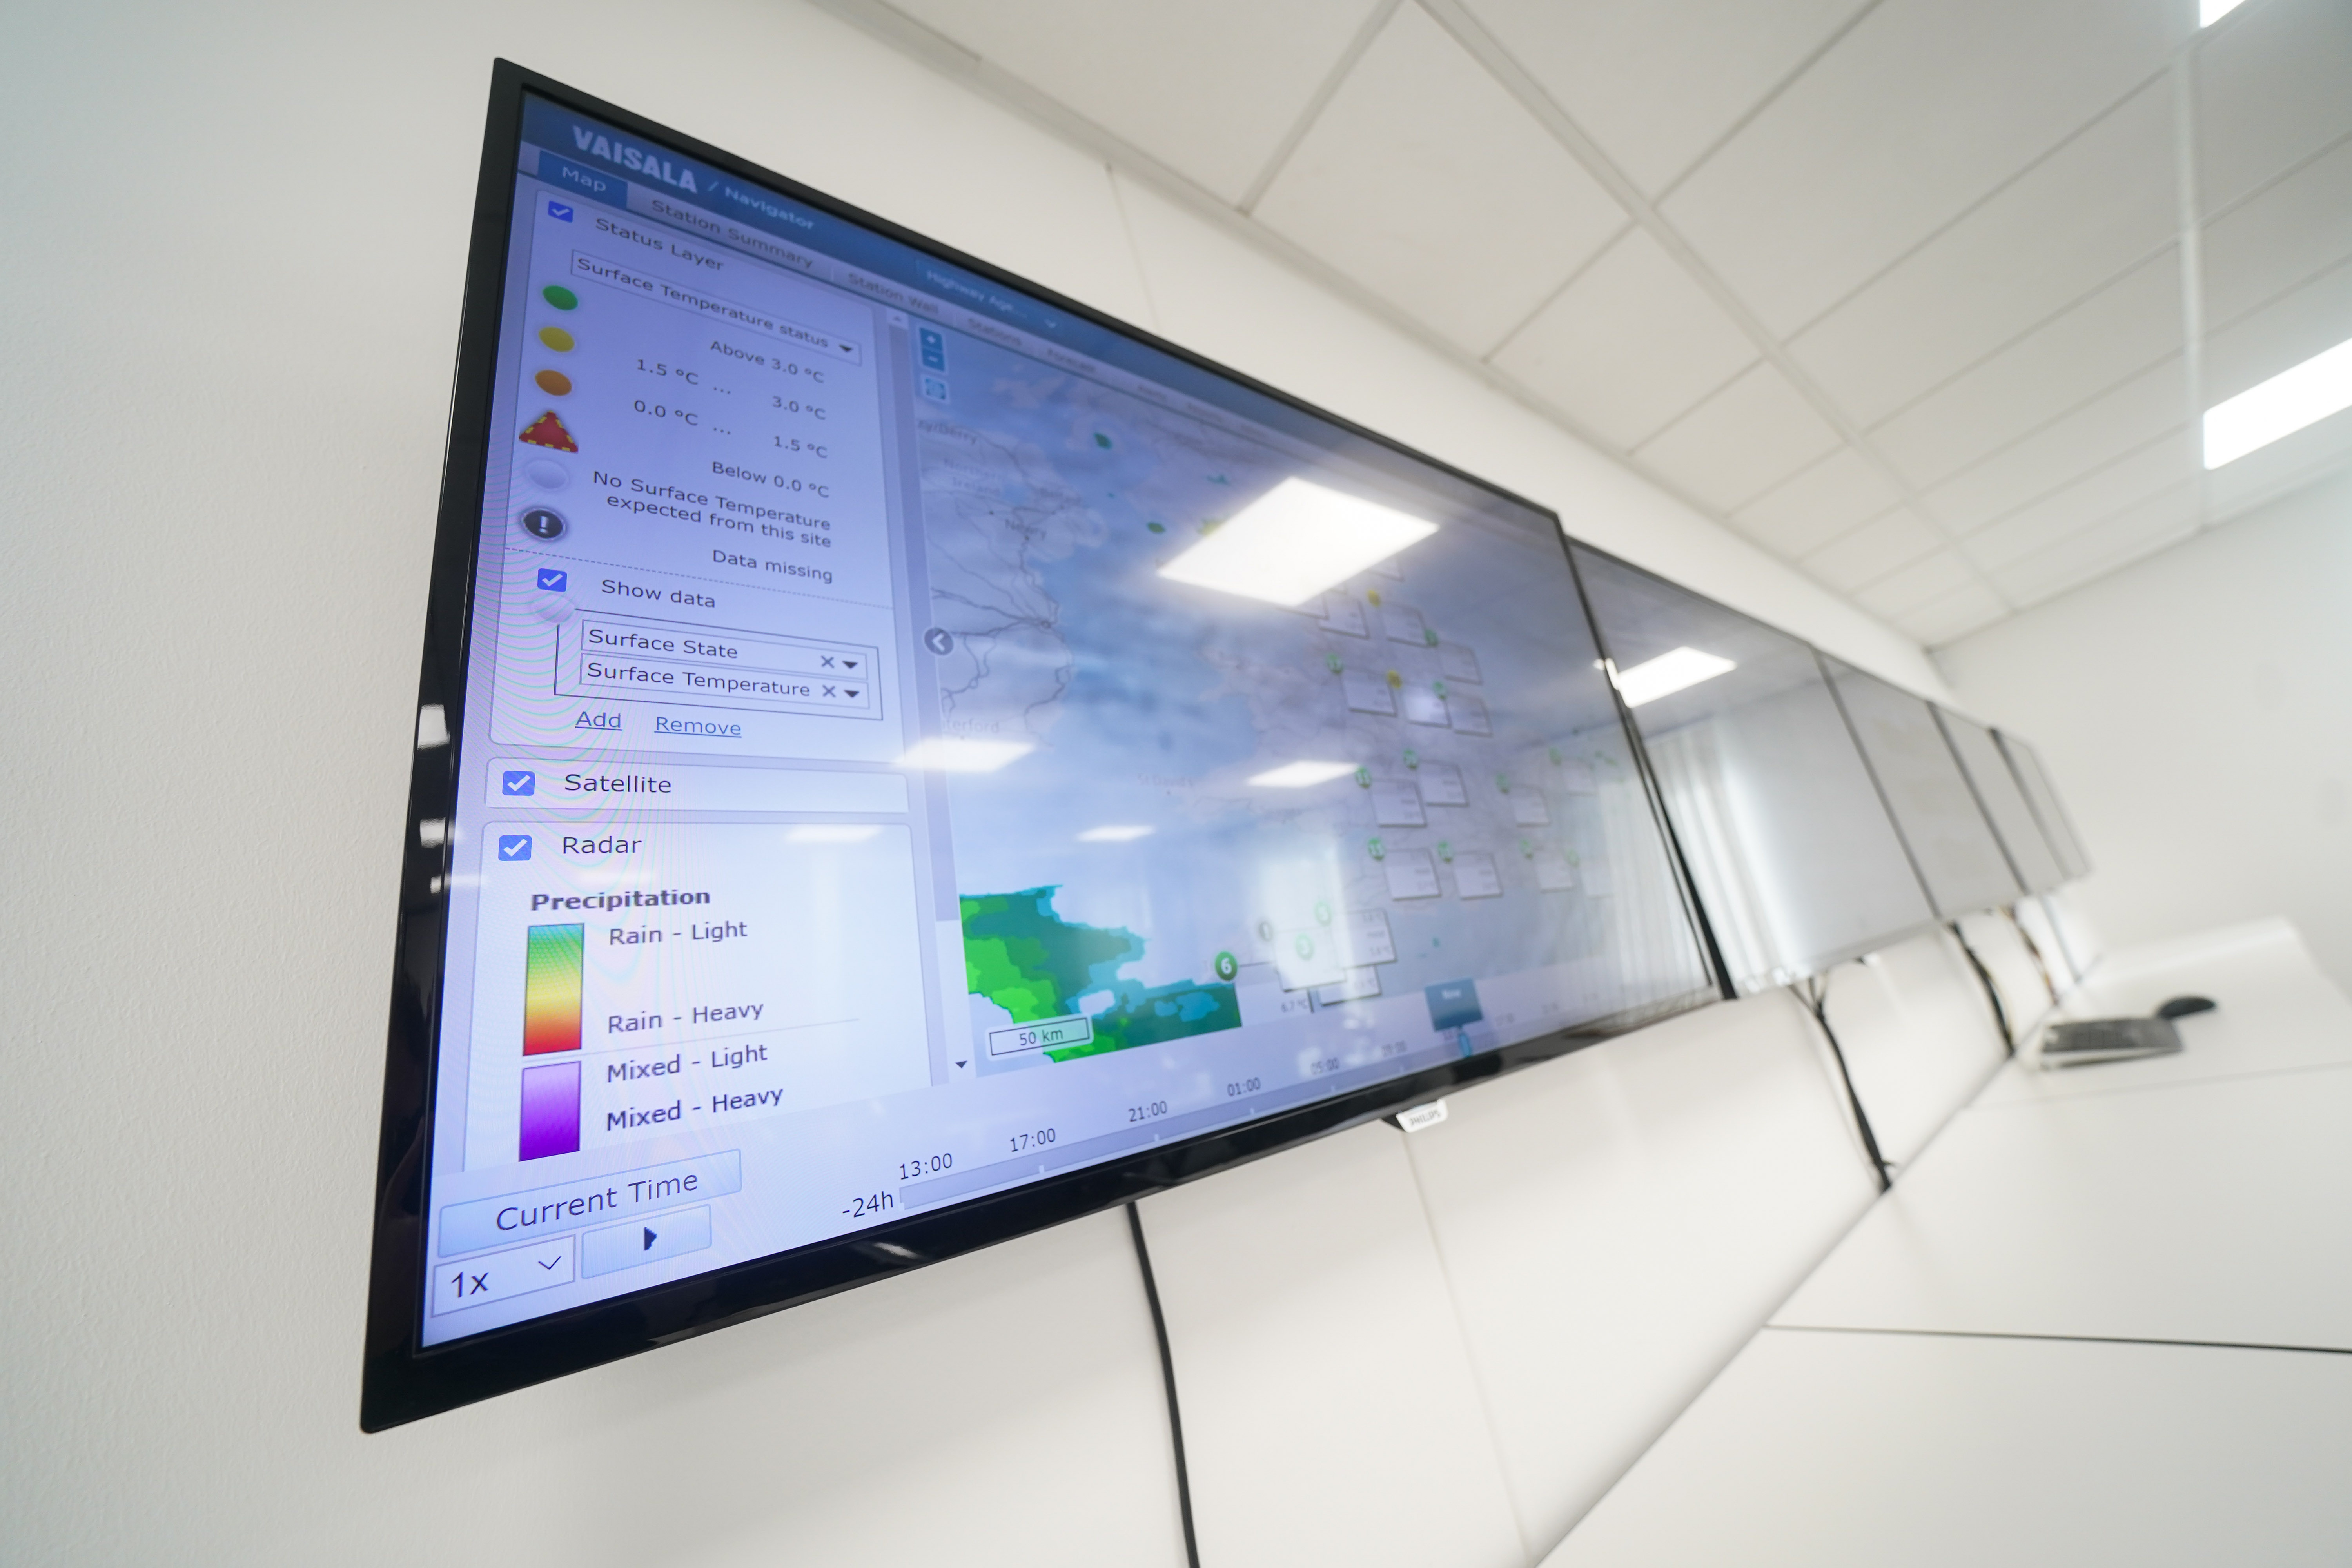 Information screens displaying weather data